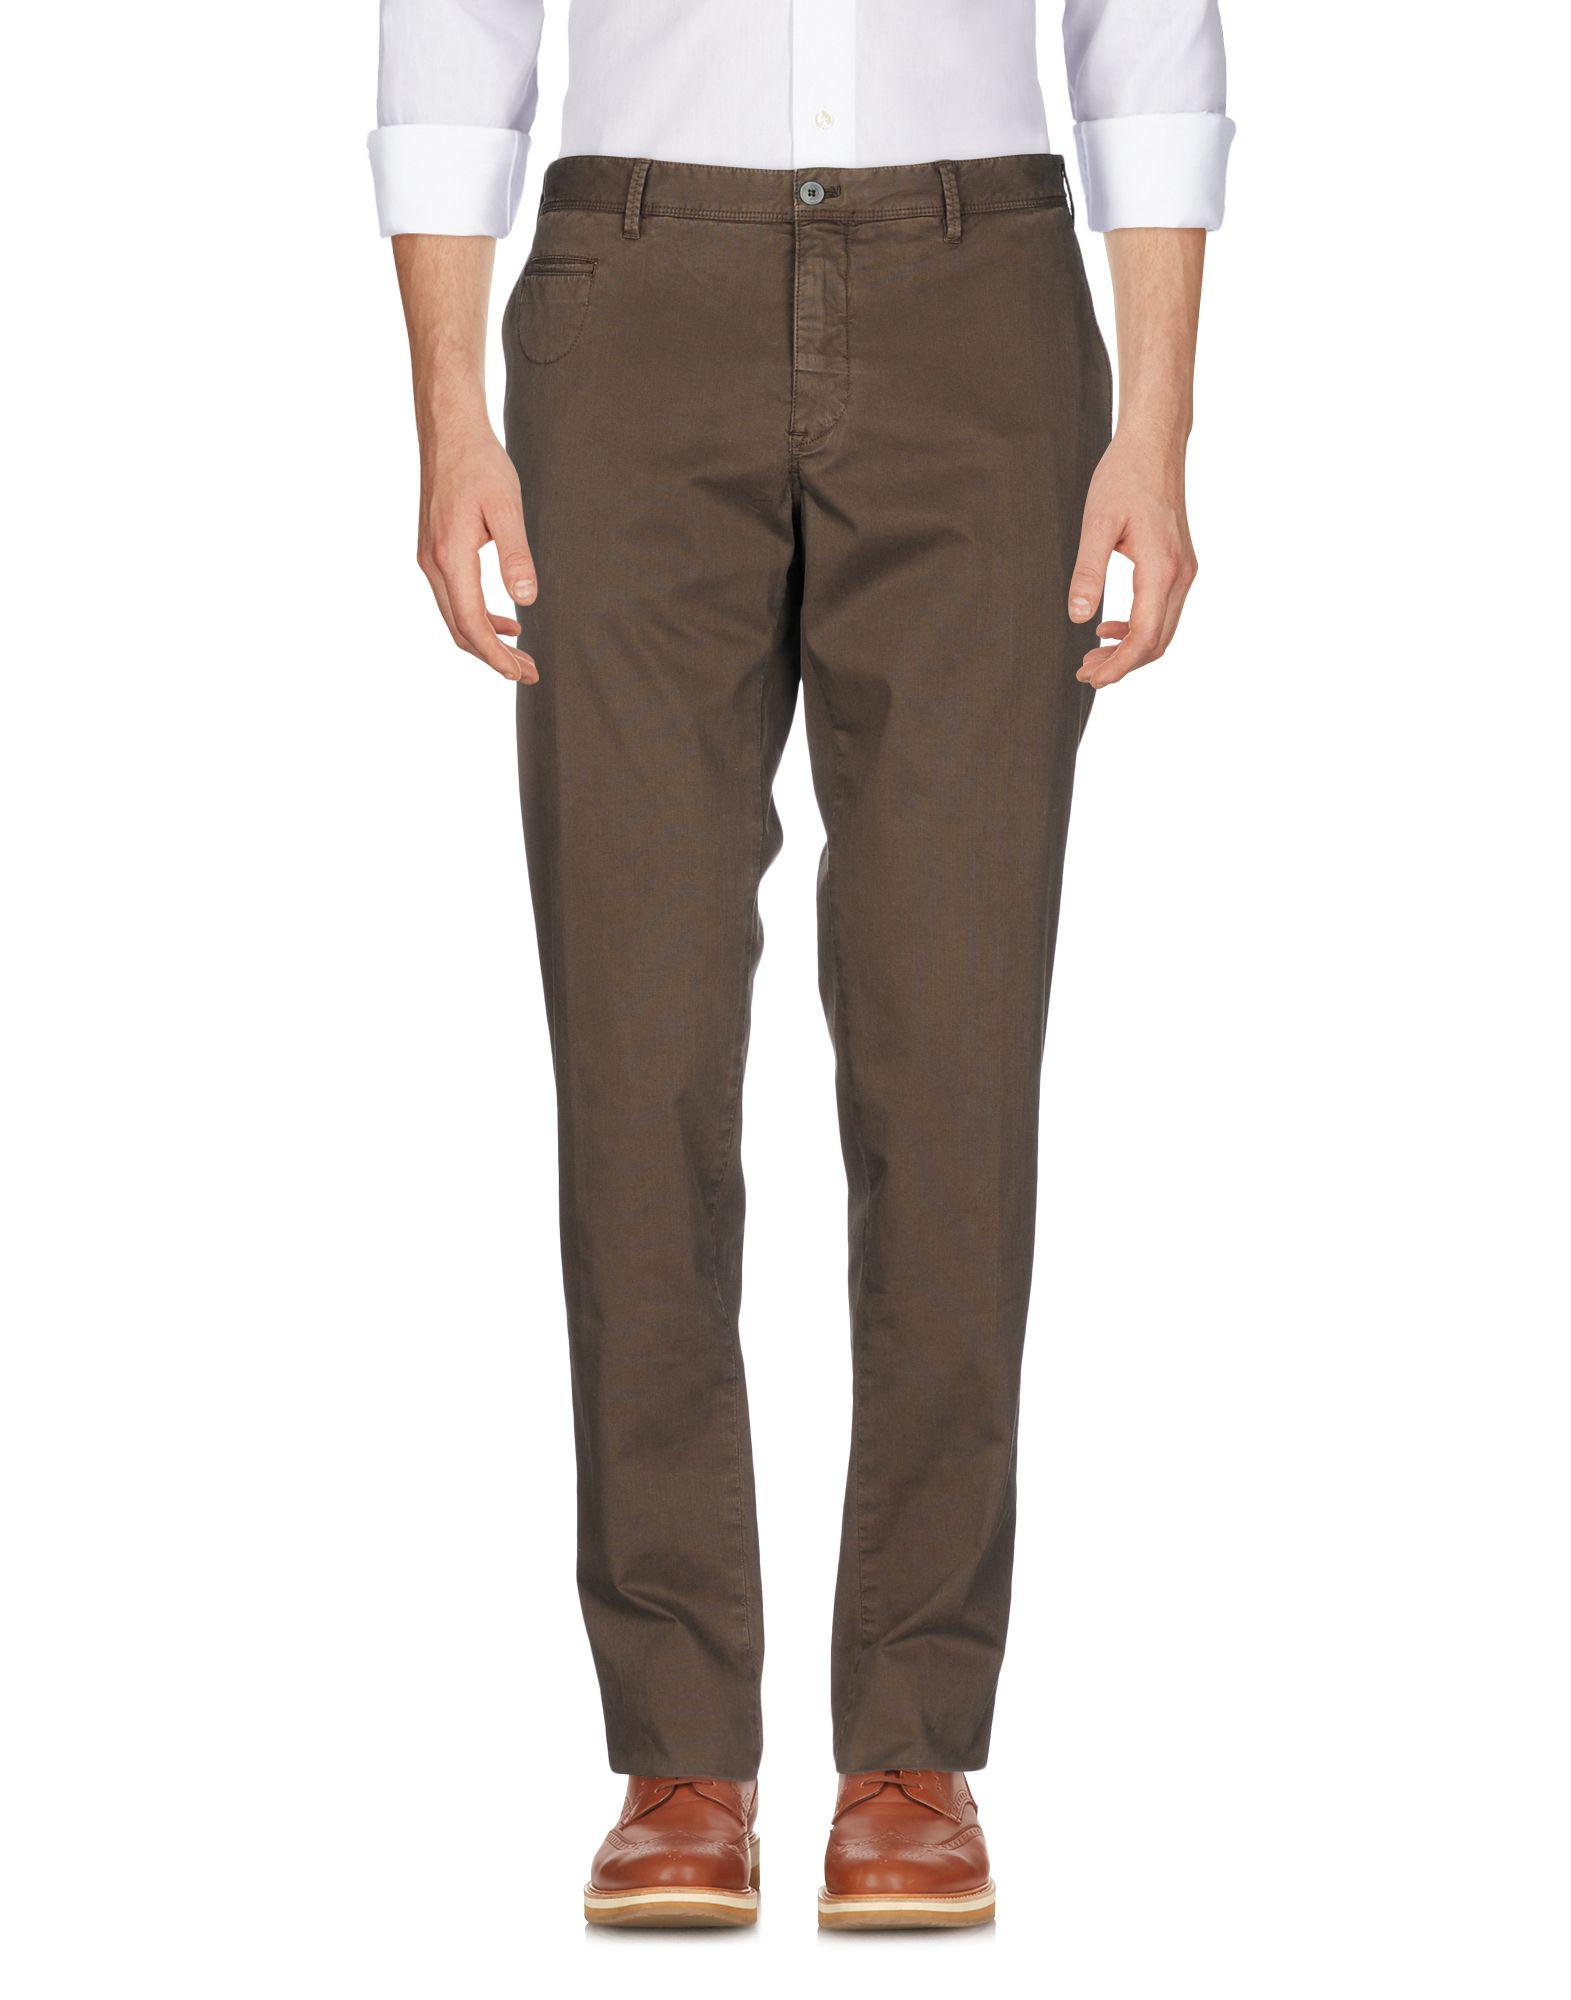 PT01 Cotton Casual Pants in Dark Brown (Brown) for Men - Lyst